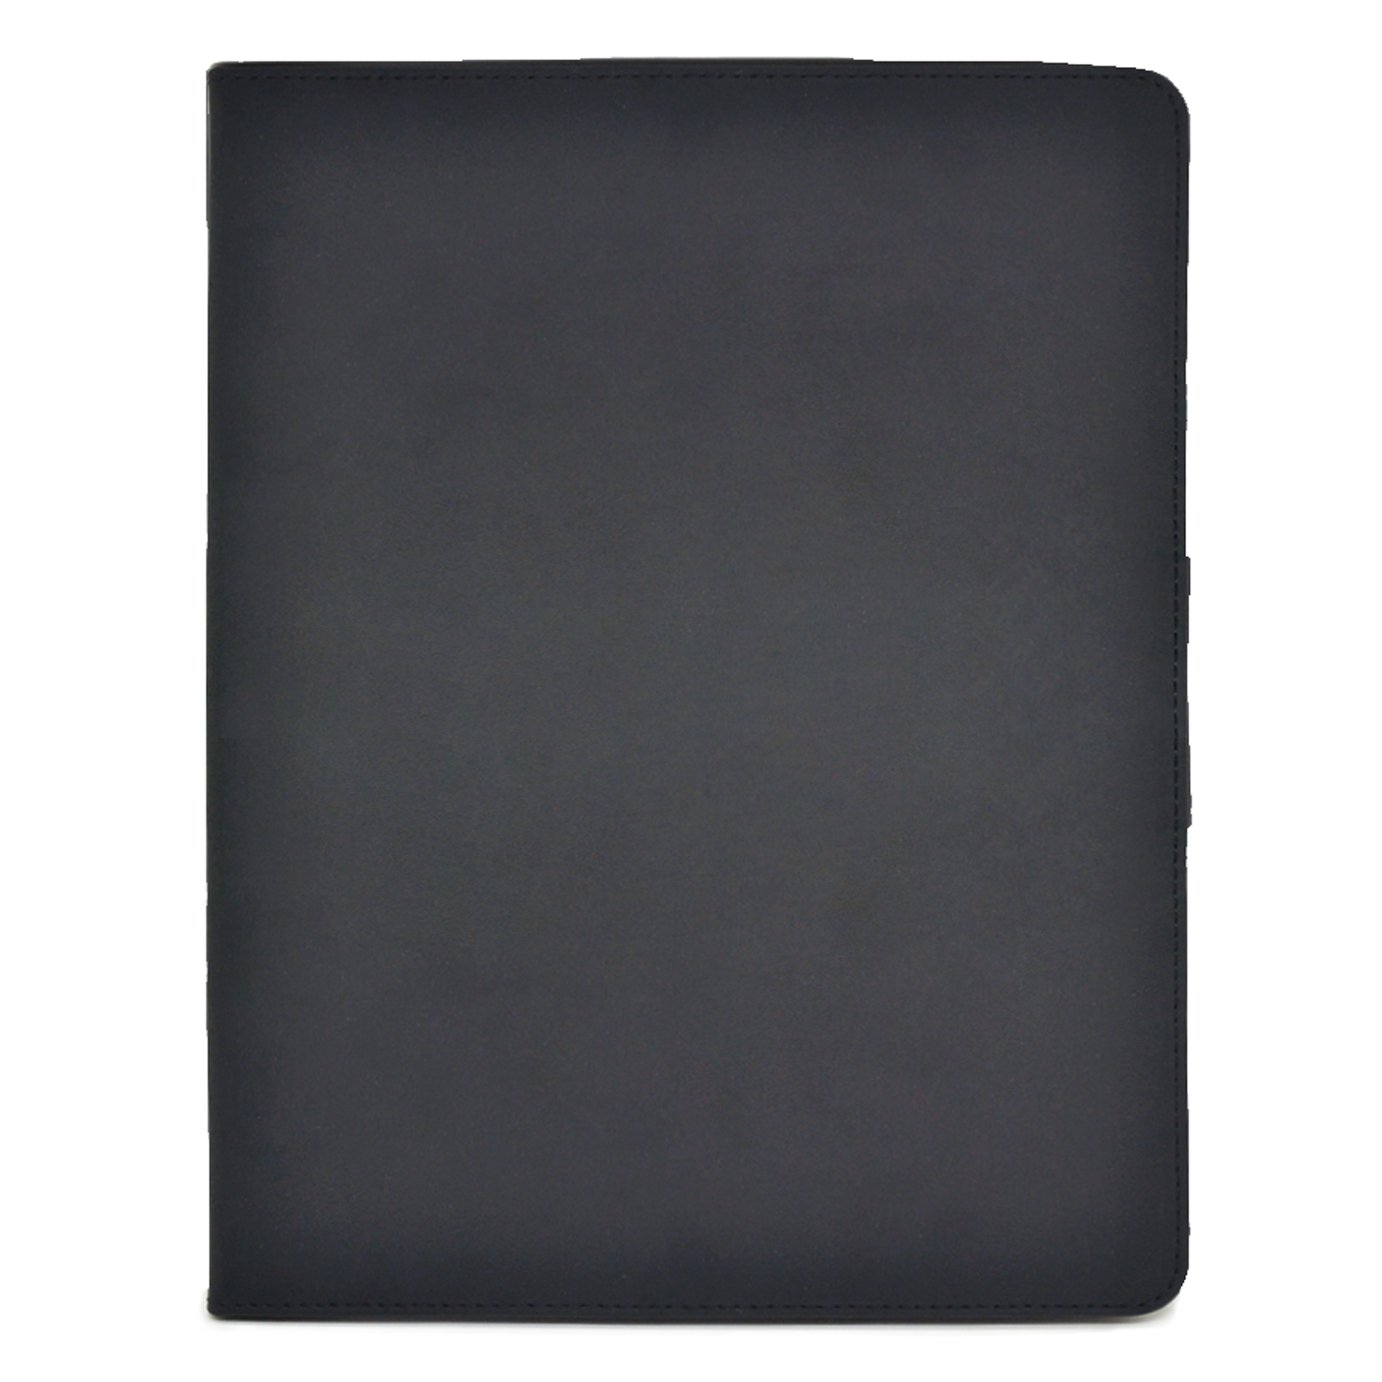 Proporta iPad Pro 12.9Inch 6th Gen Case - Black